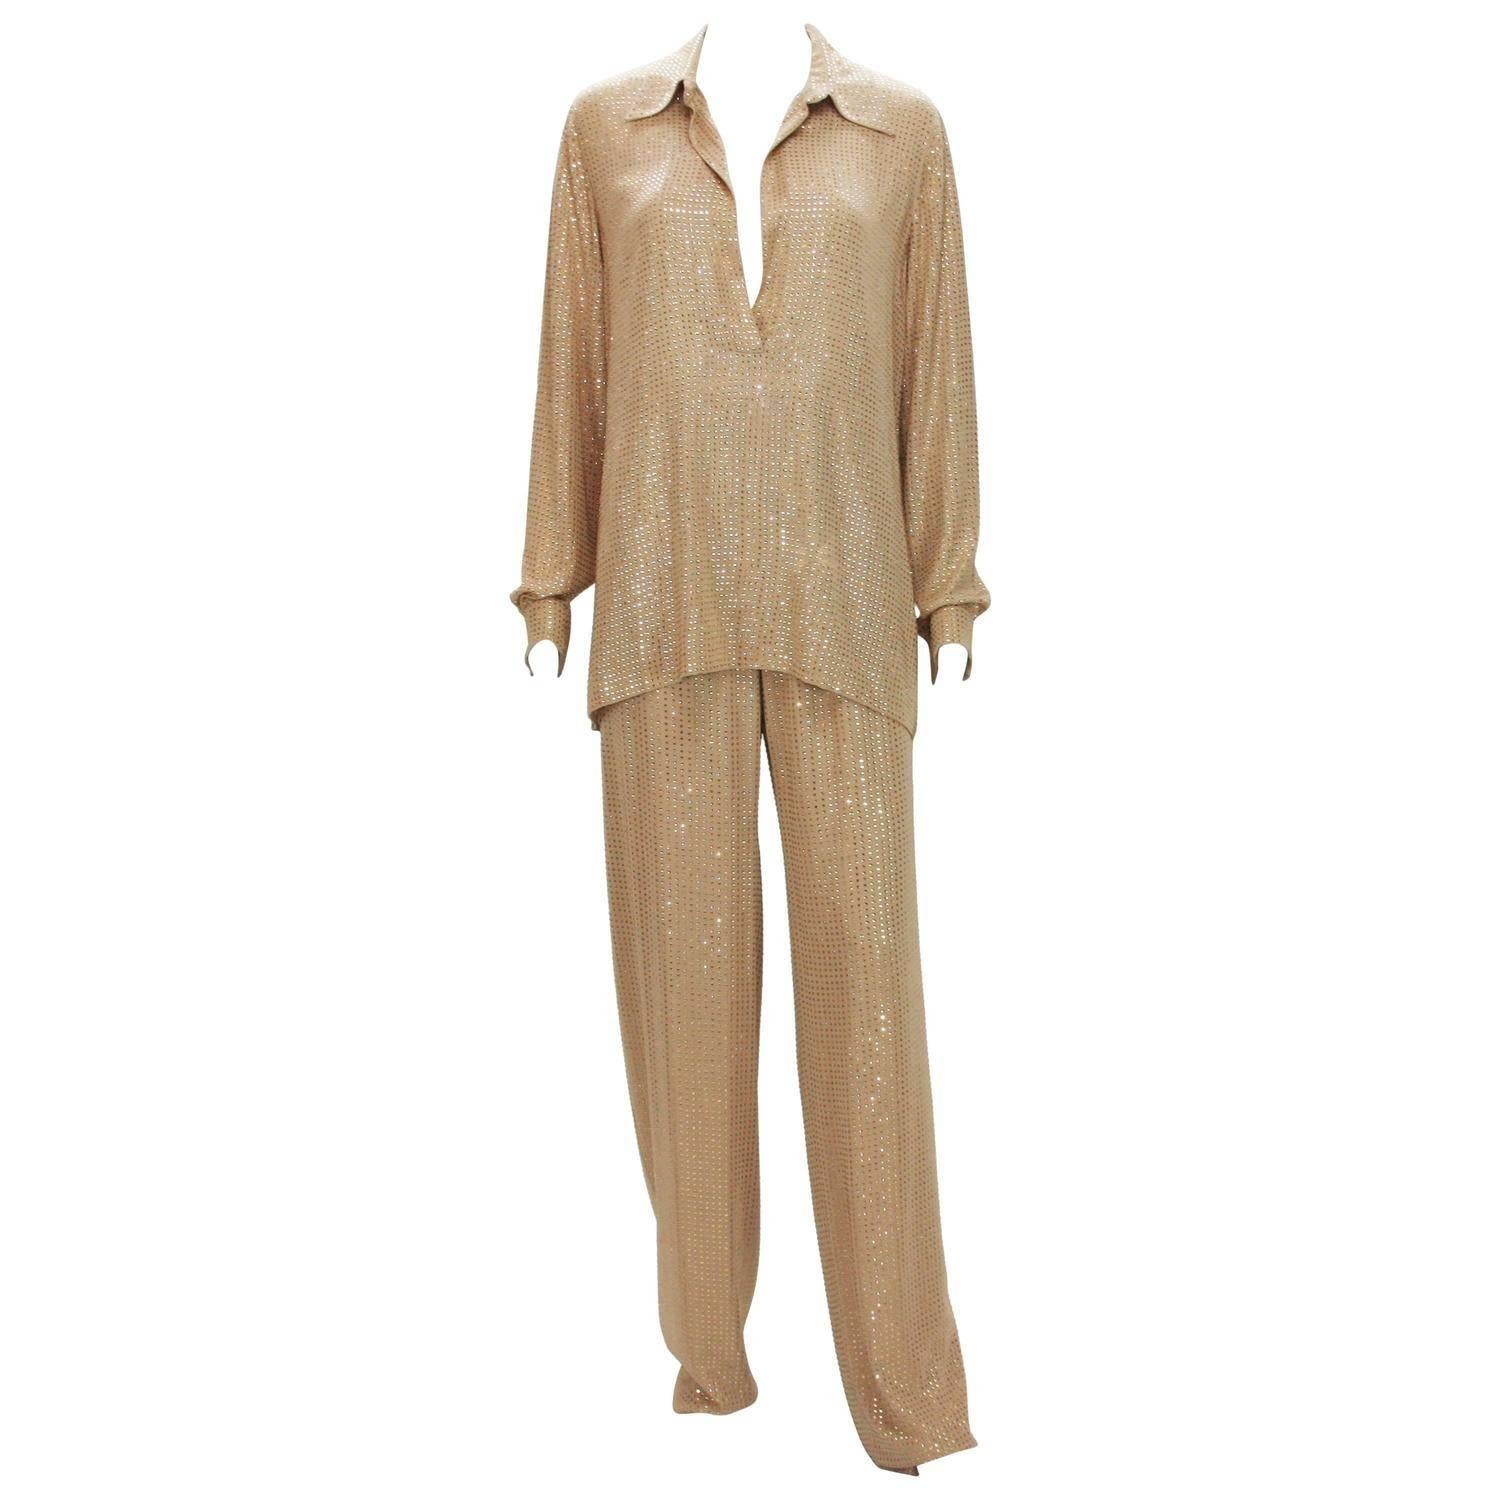 New Gucci Fully Embellished Rhinestone Tan Evening Pant Suit Italian 40